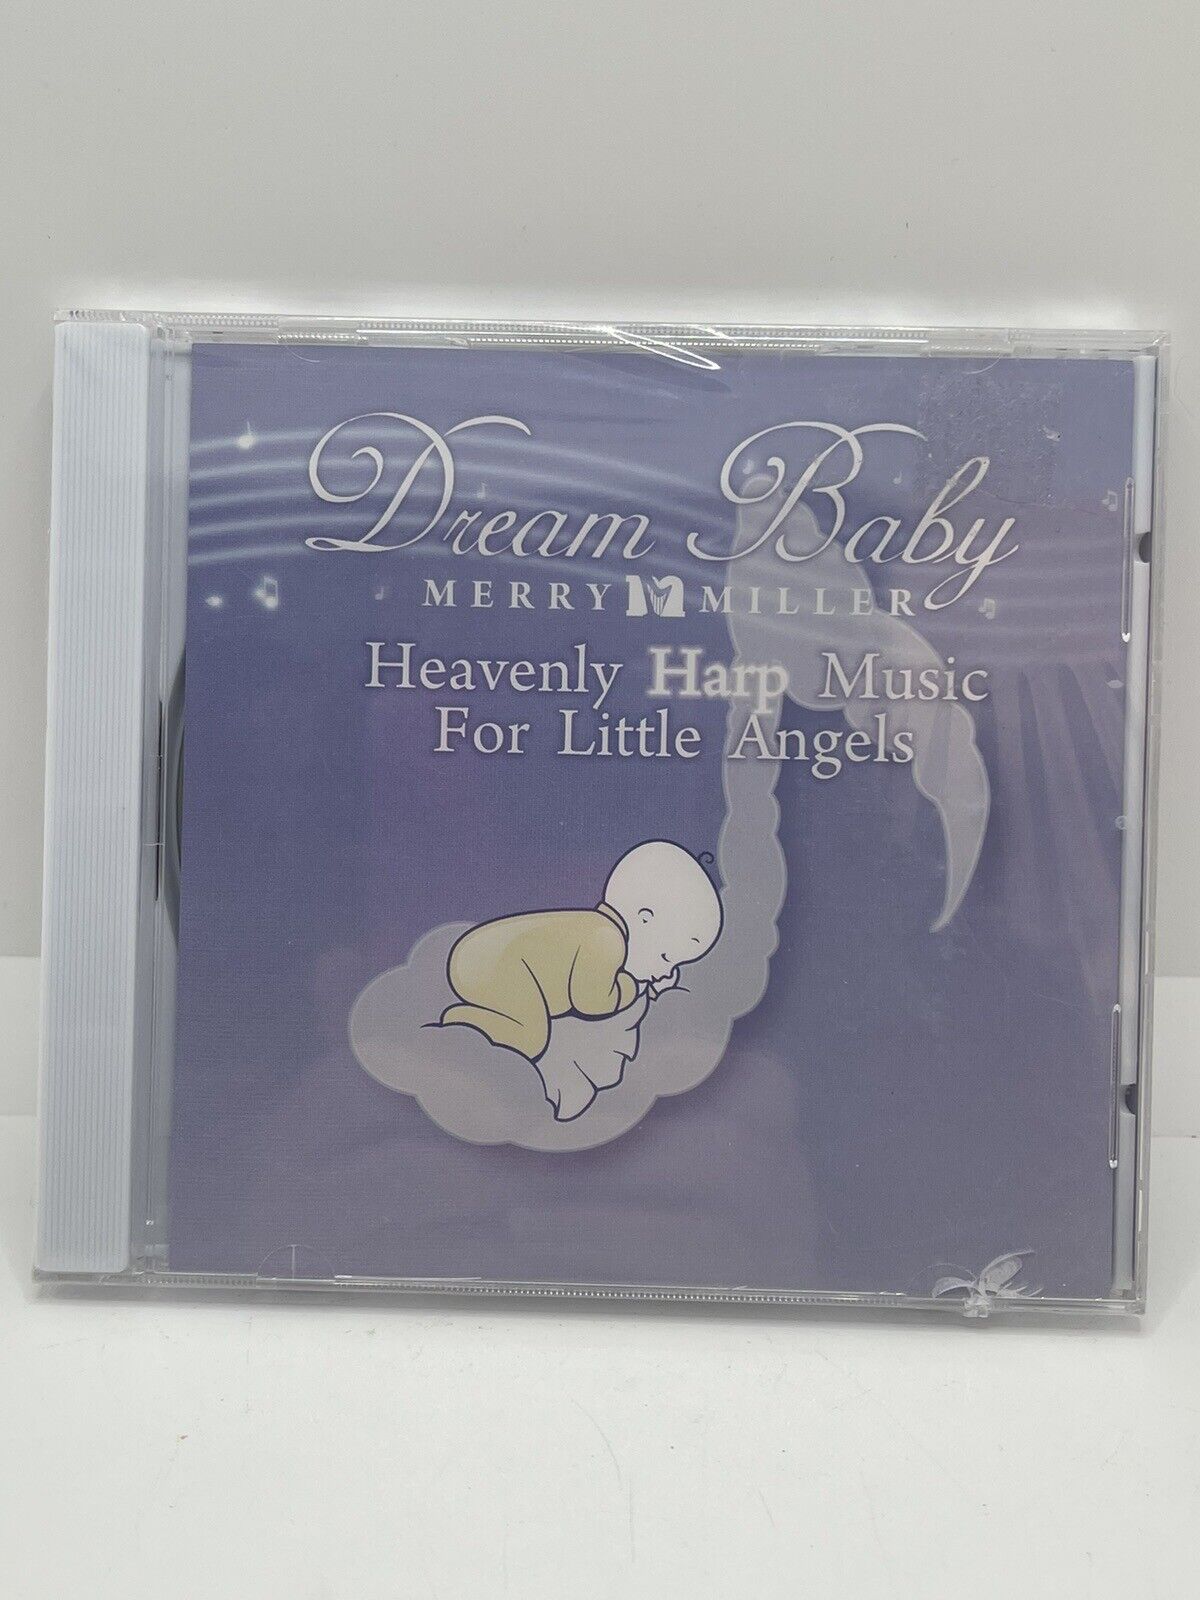 Merry Miller Heavenly Harp Music For Little Angels Sealed New Old Stock CD